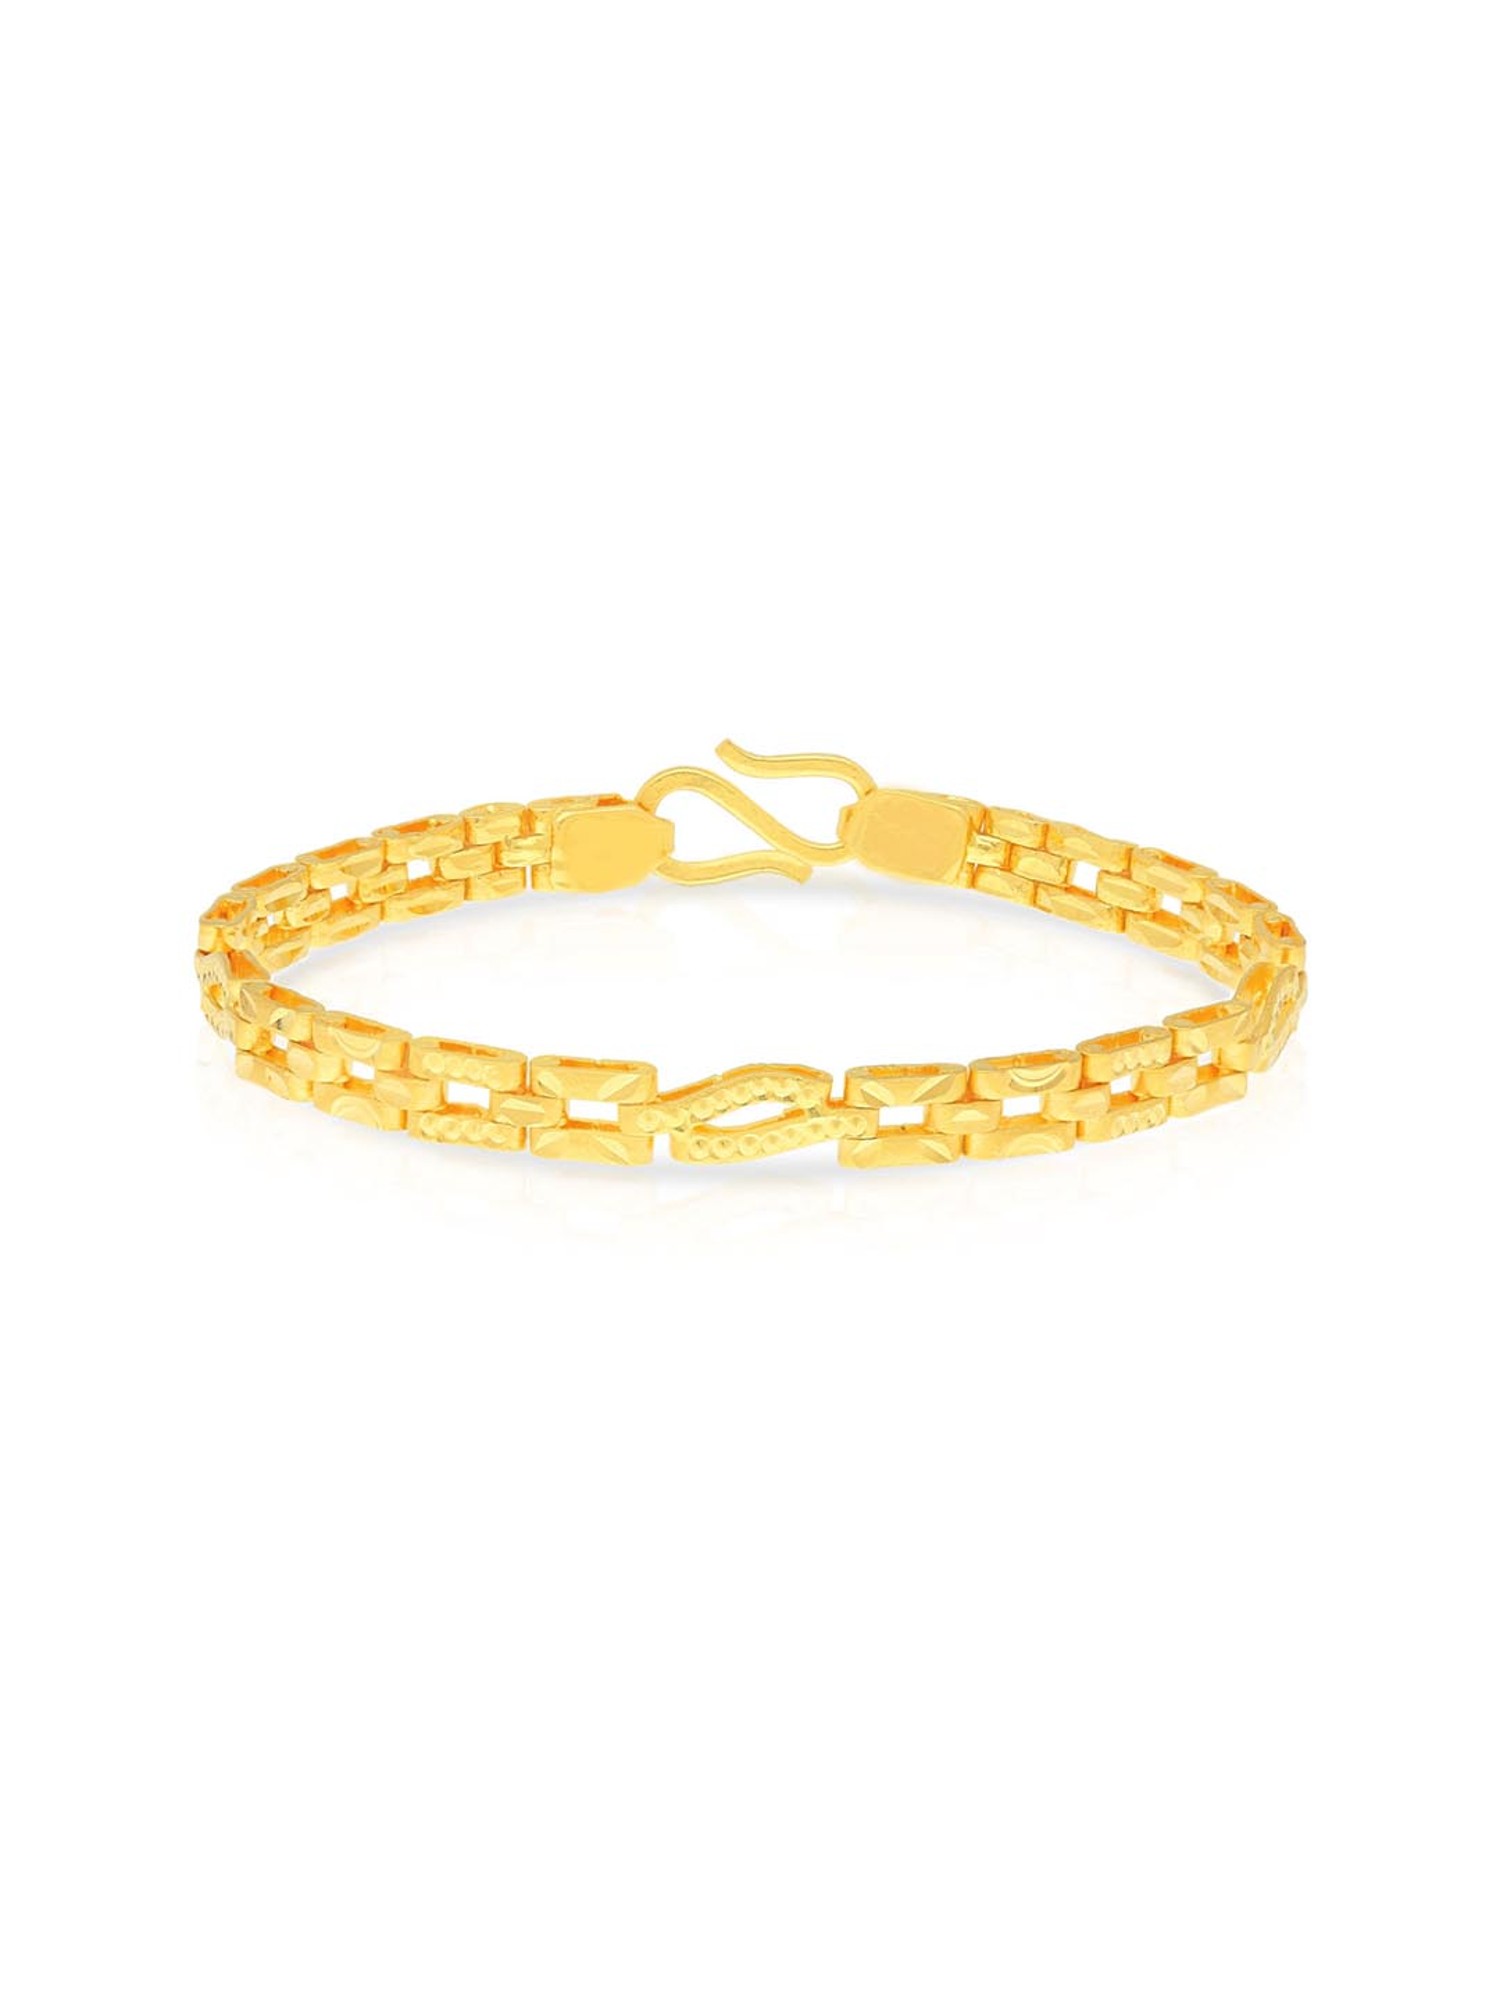 Buy Yellow Gold Bangles for Women by Malabar Gold  Diamonds Online   Ajiocom